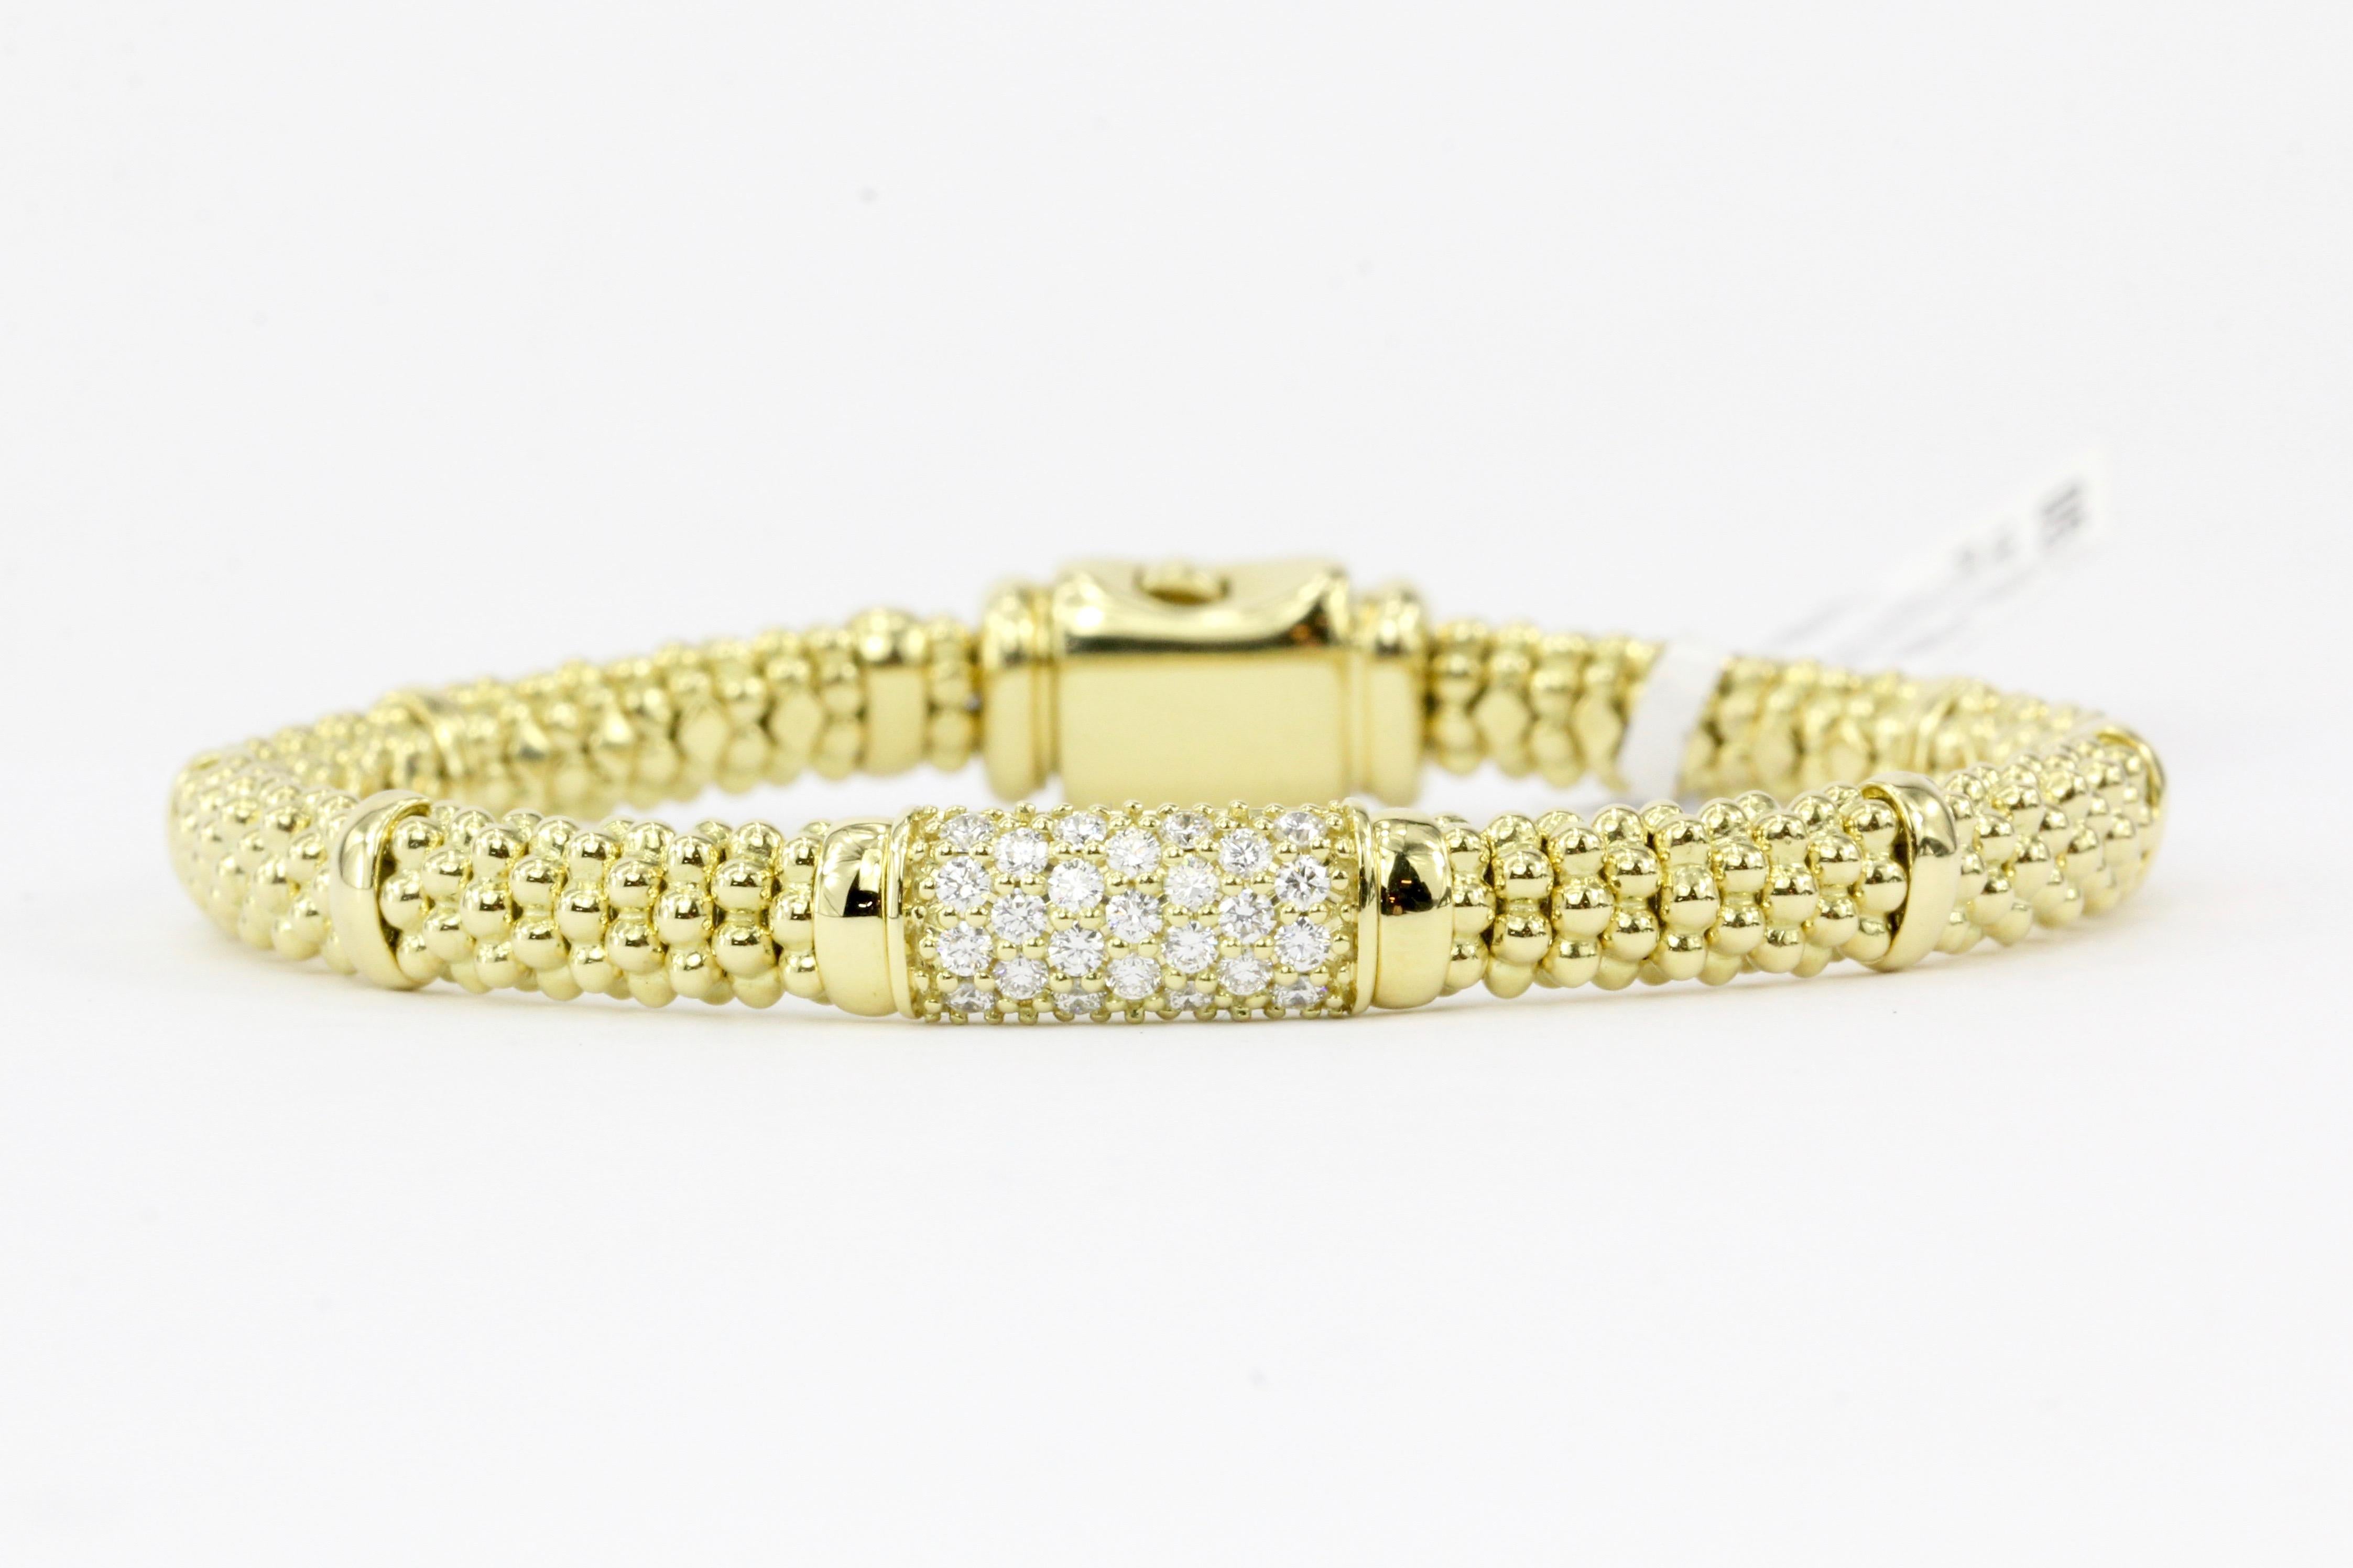 Era: Modern

Hallmarks: LAGOS, 750, Caviar

Composition: 18K Yellow Gold

Primary Stone: Diamonds

Total Diamond Weight: .55 carats

Bracelet length: 6.75 inches

Bracelet width: 9.58mm

Bracelet Weight: 31.3 grams 

Bracelet Condition: New